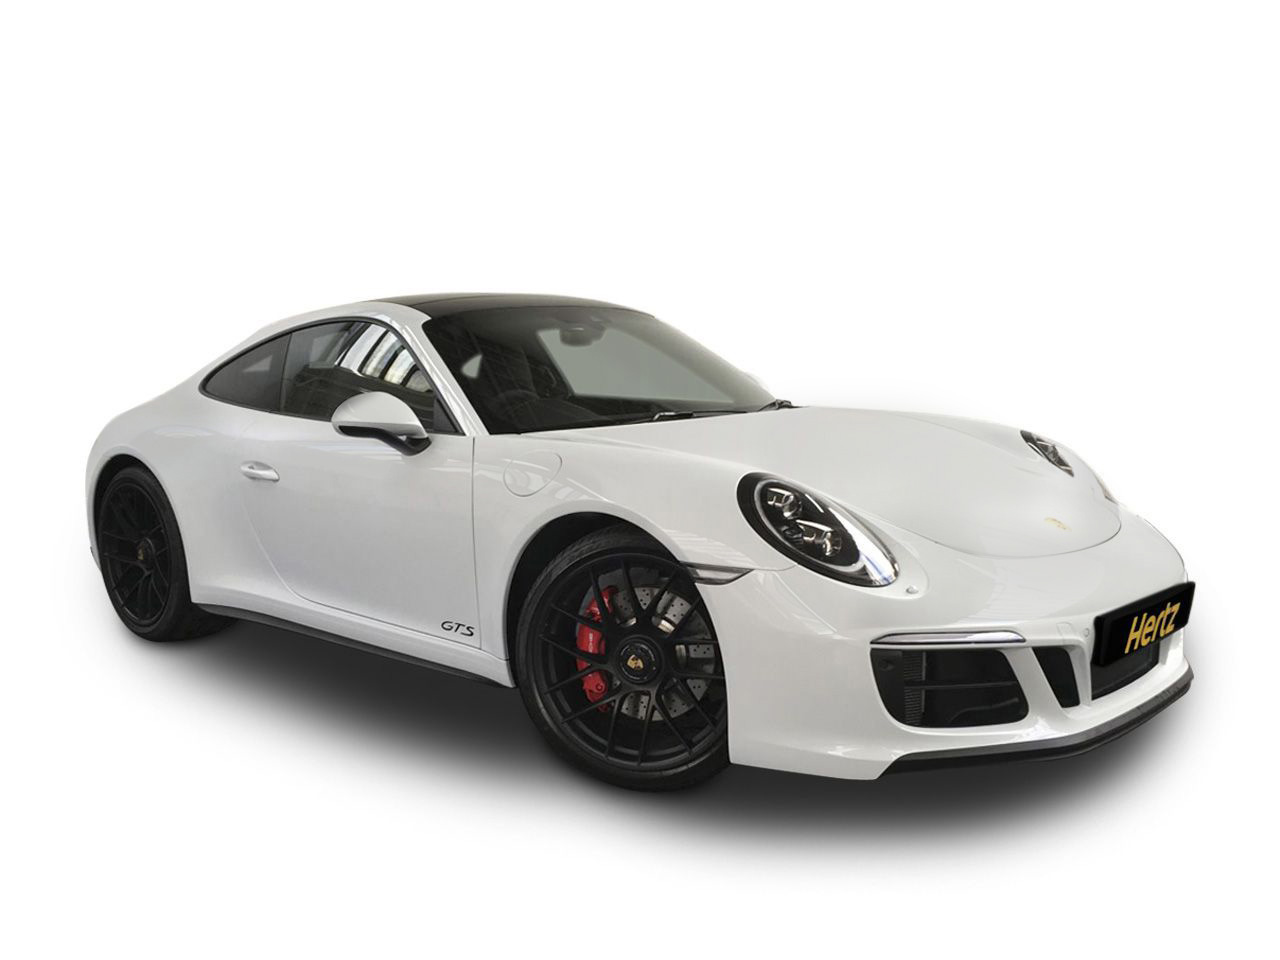 Porsche 911 GTS car for hire